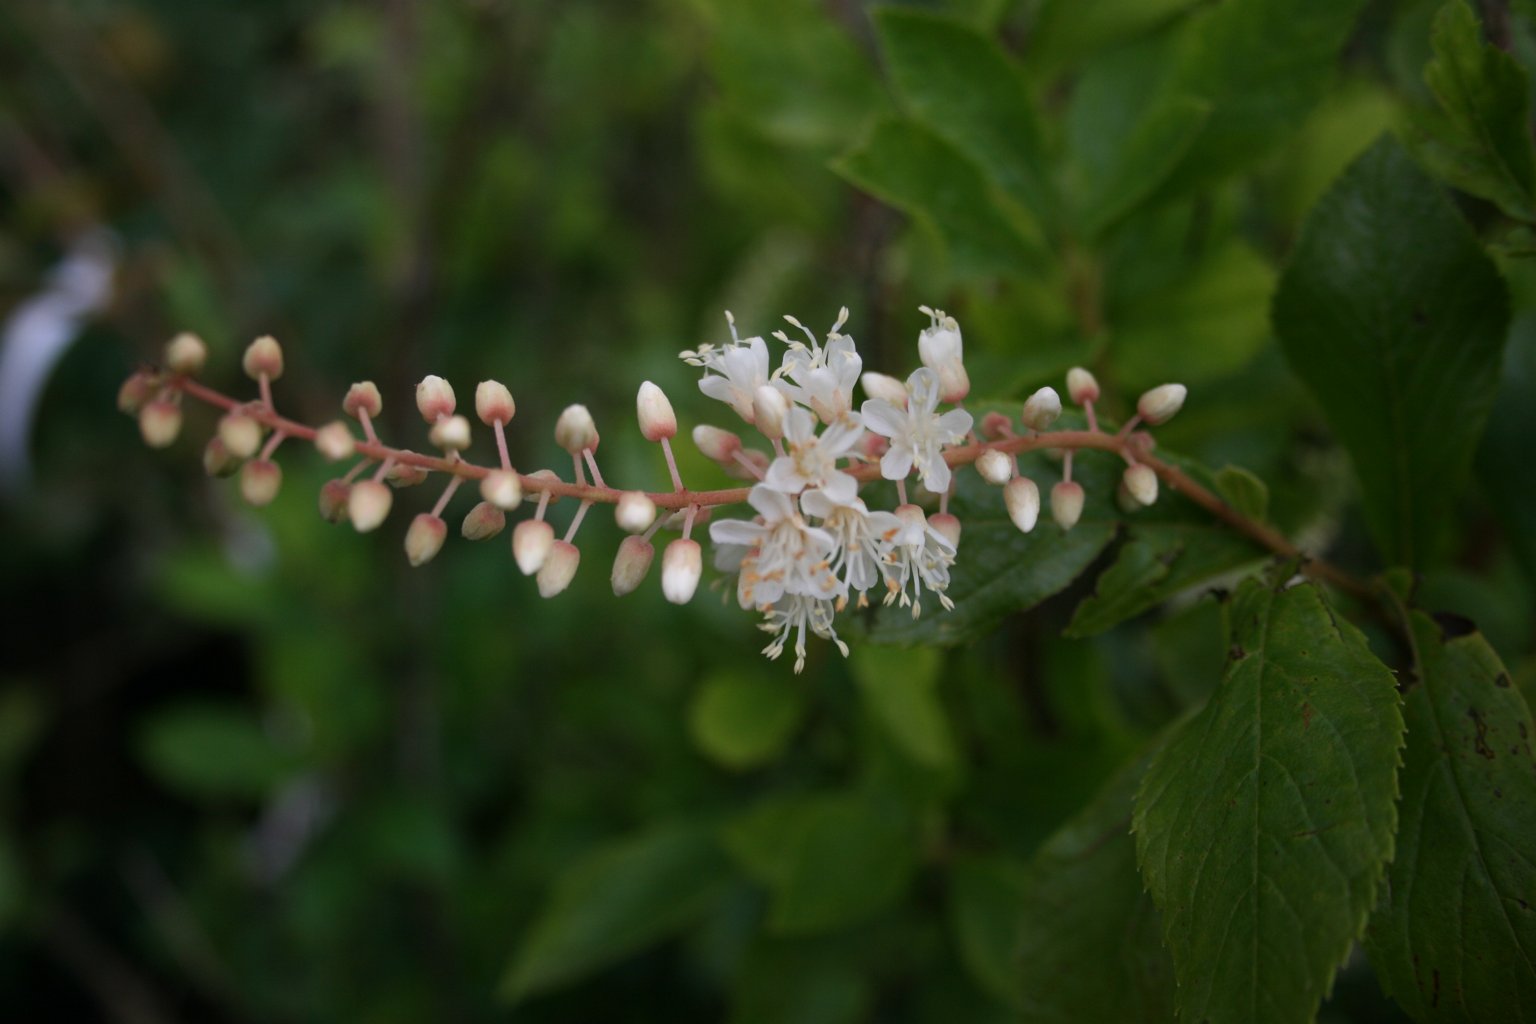 Orszelina olcholistna "Hummingbird" / Clethra alnifolia "Hummingbird"